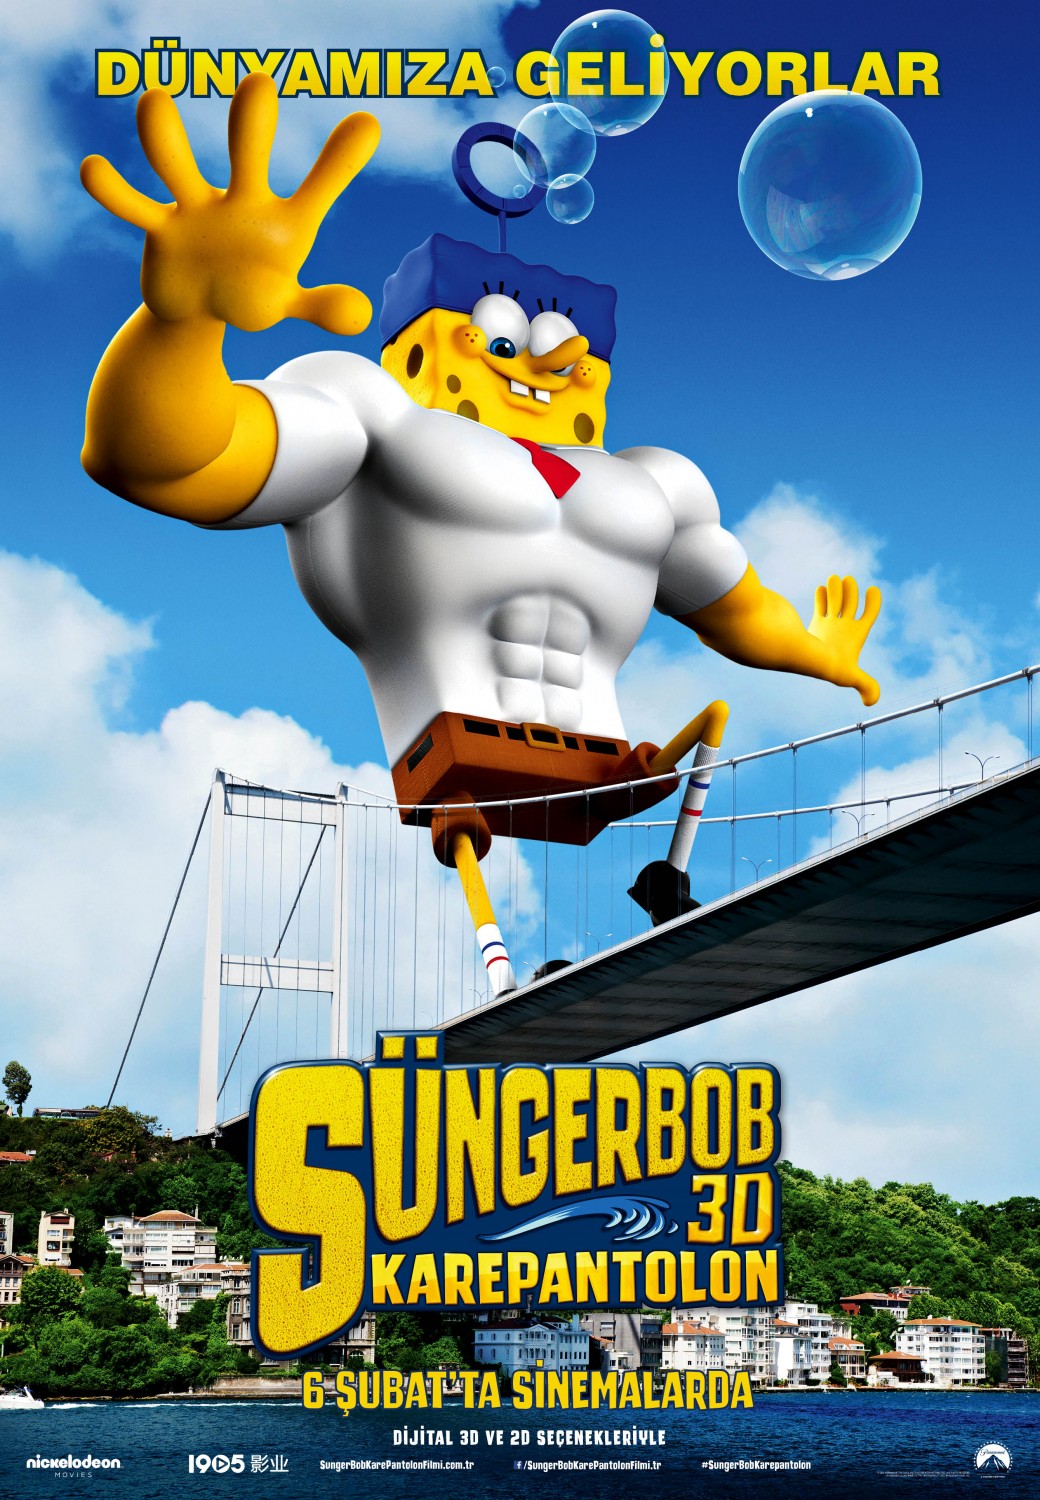 Extra Large Movie Poster Image for SpongeBob SquarePants 2 (#28 of 33)